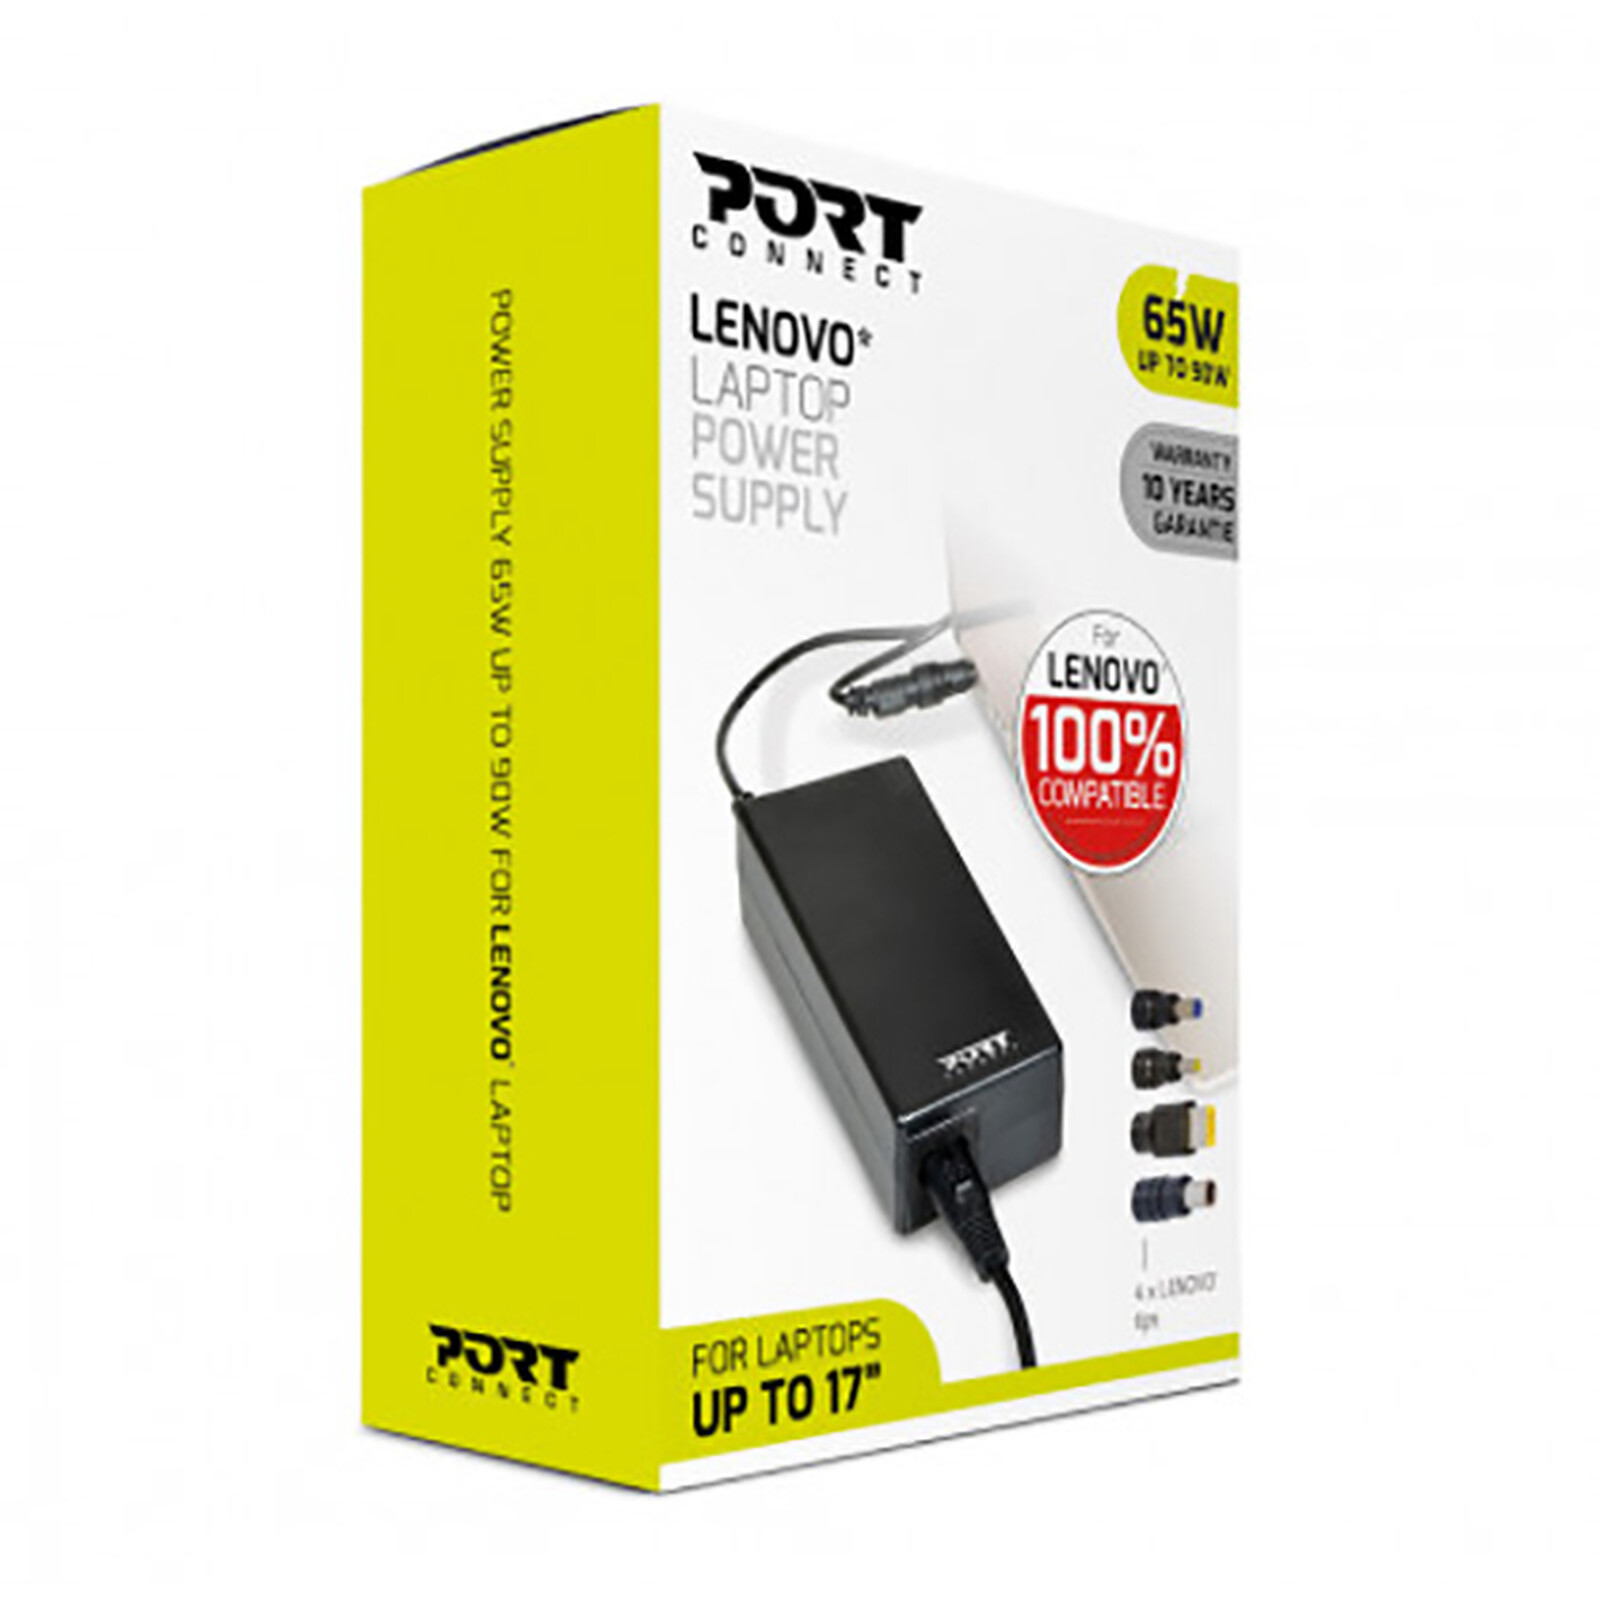 PORT Connect Lenovo Power Supply (65W) - Chargeur PC portable - Garantie 3  ans LDLC